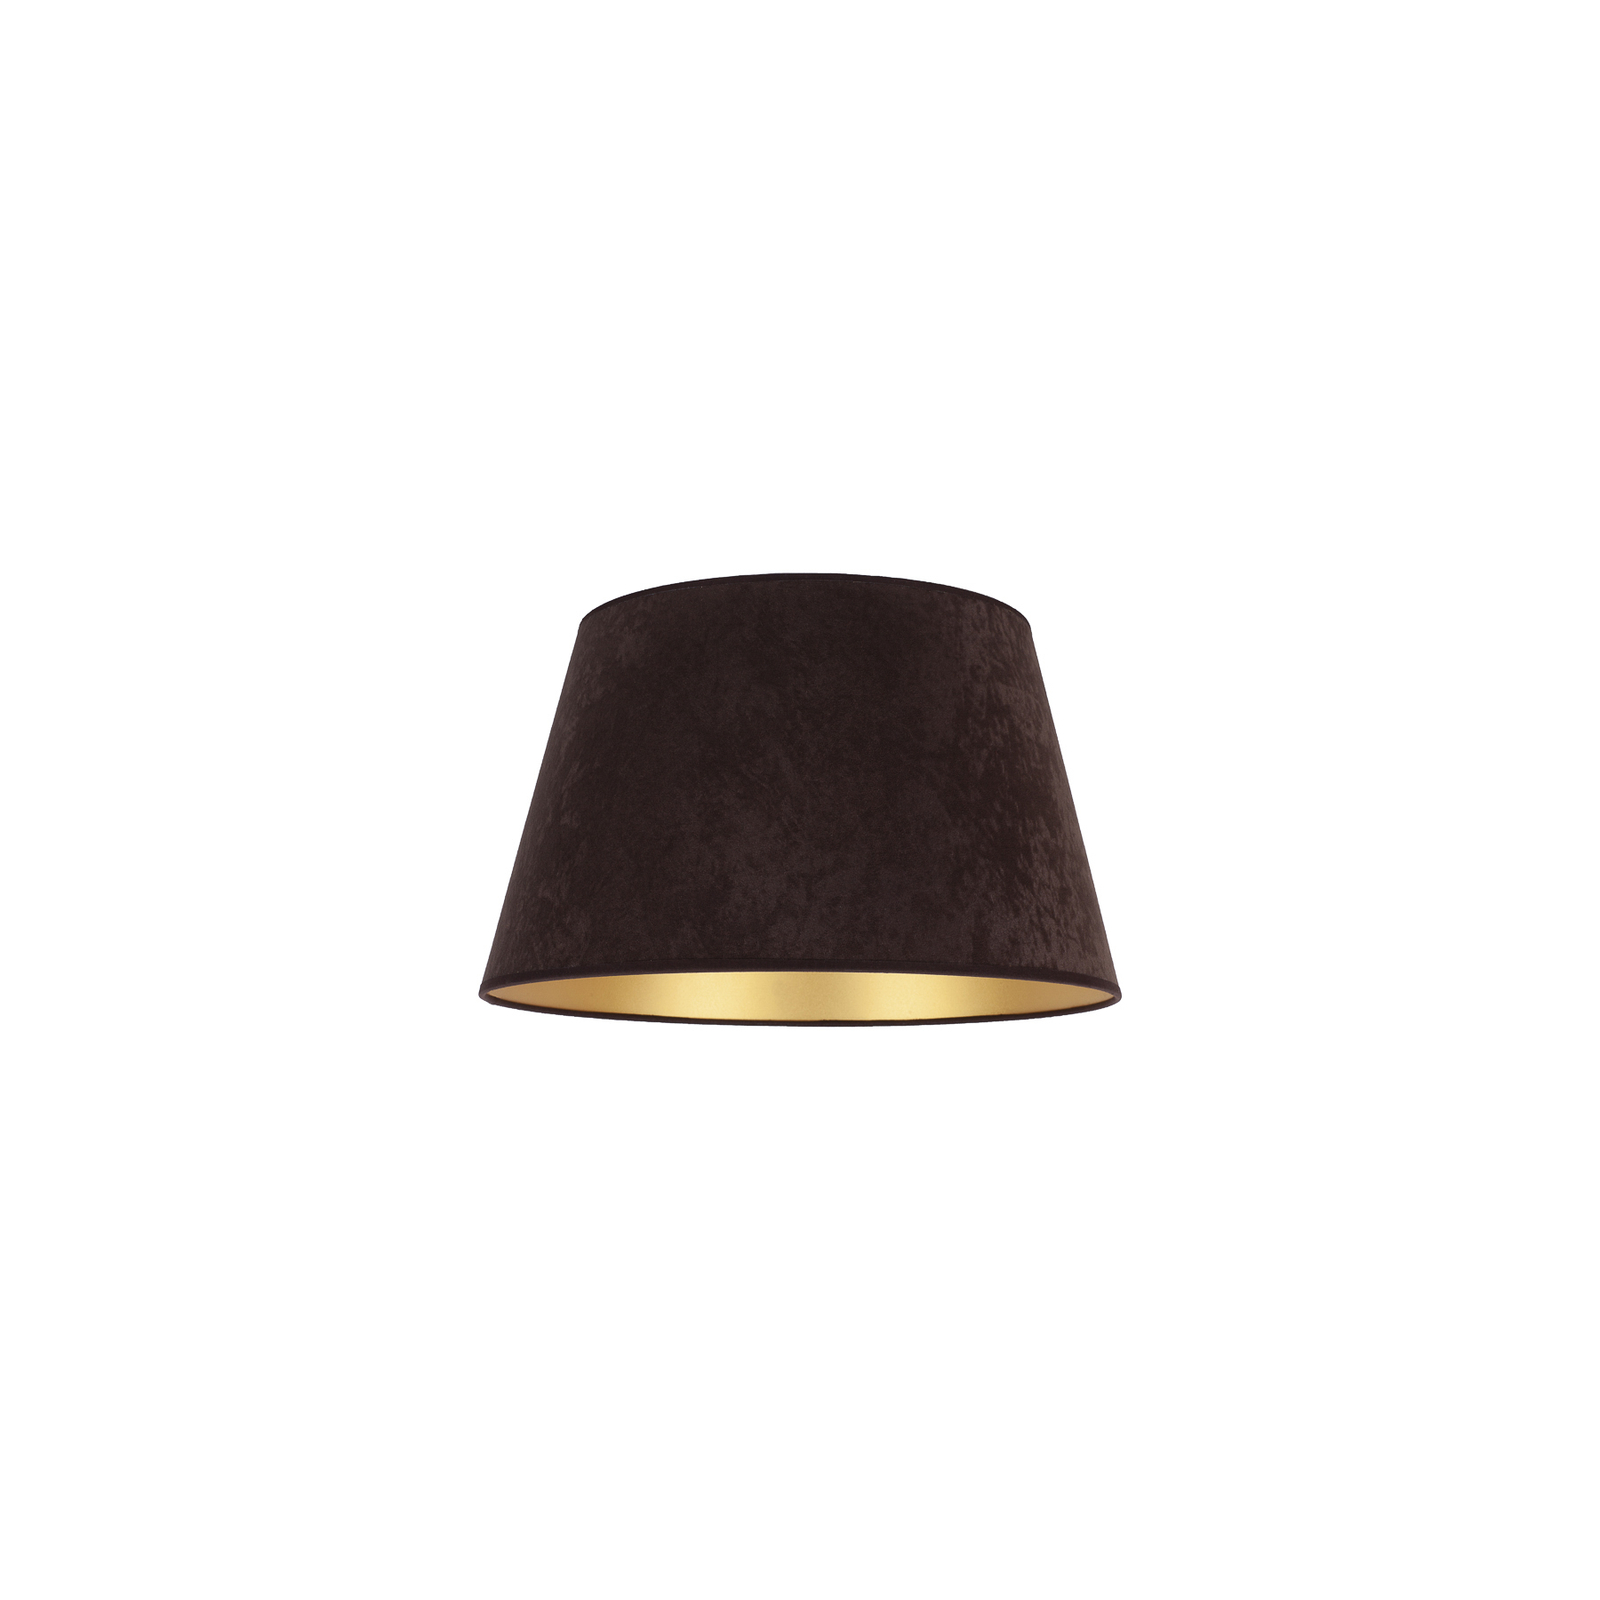 Cone lampeskærm, højde 18 cm, brun/guld